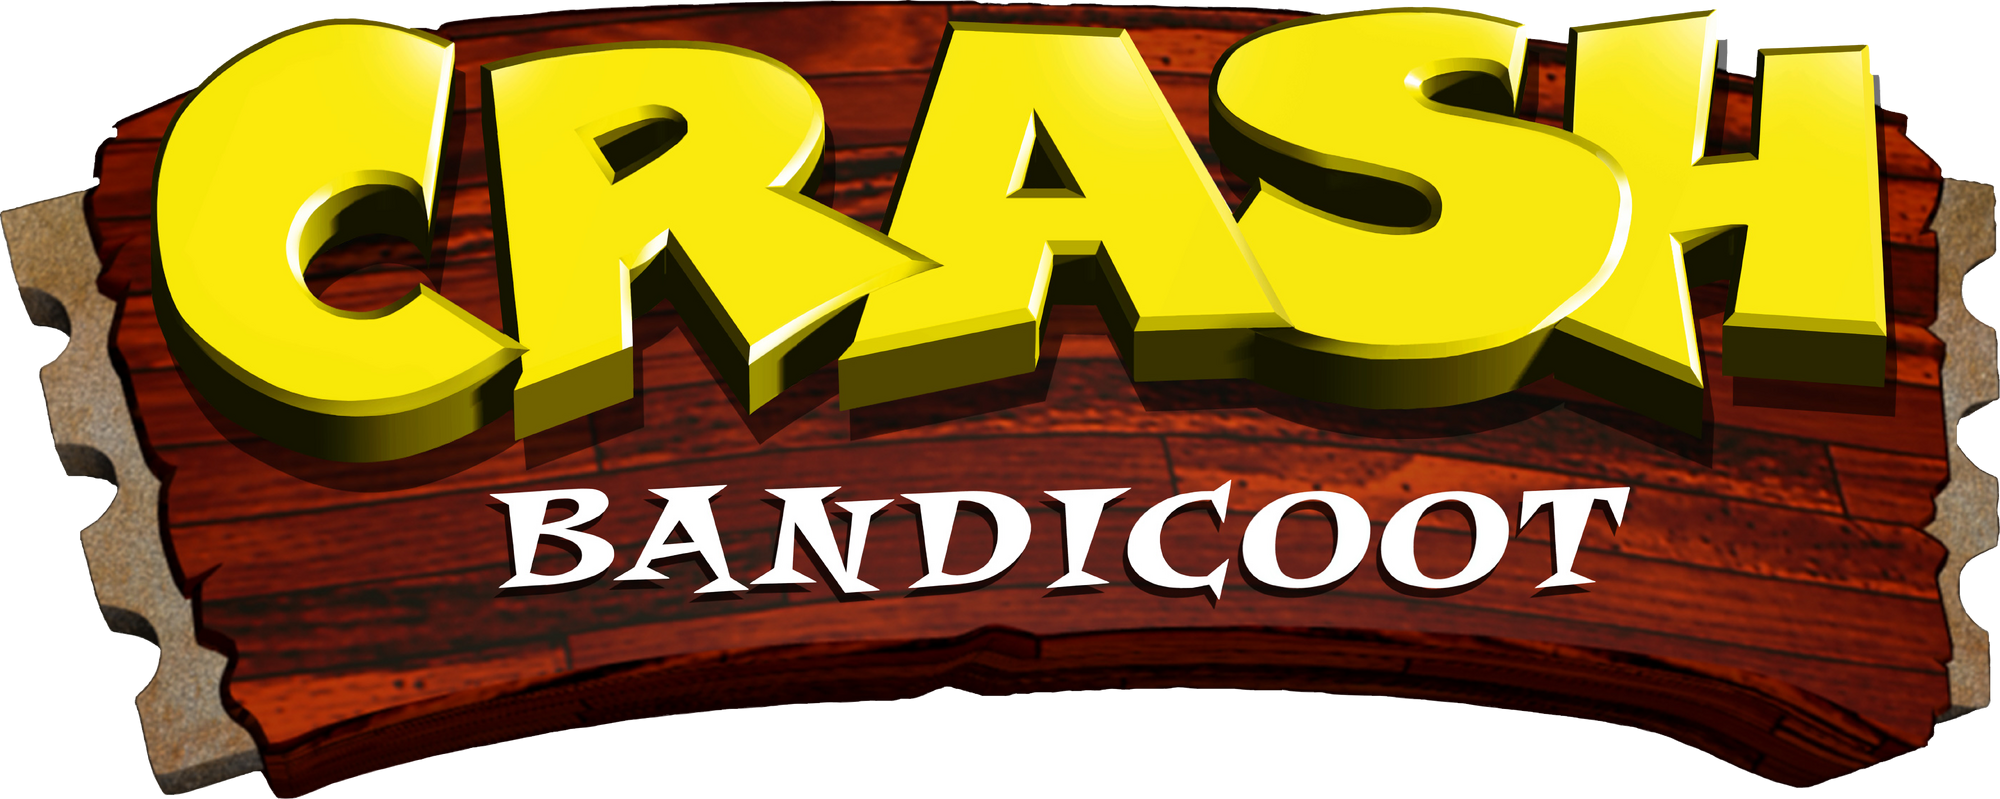 Category:Crash Bandicoot | Logopedia | FANDOM powered by Wikia